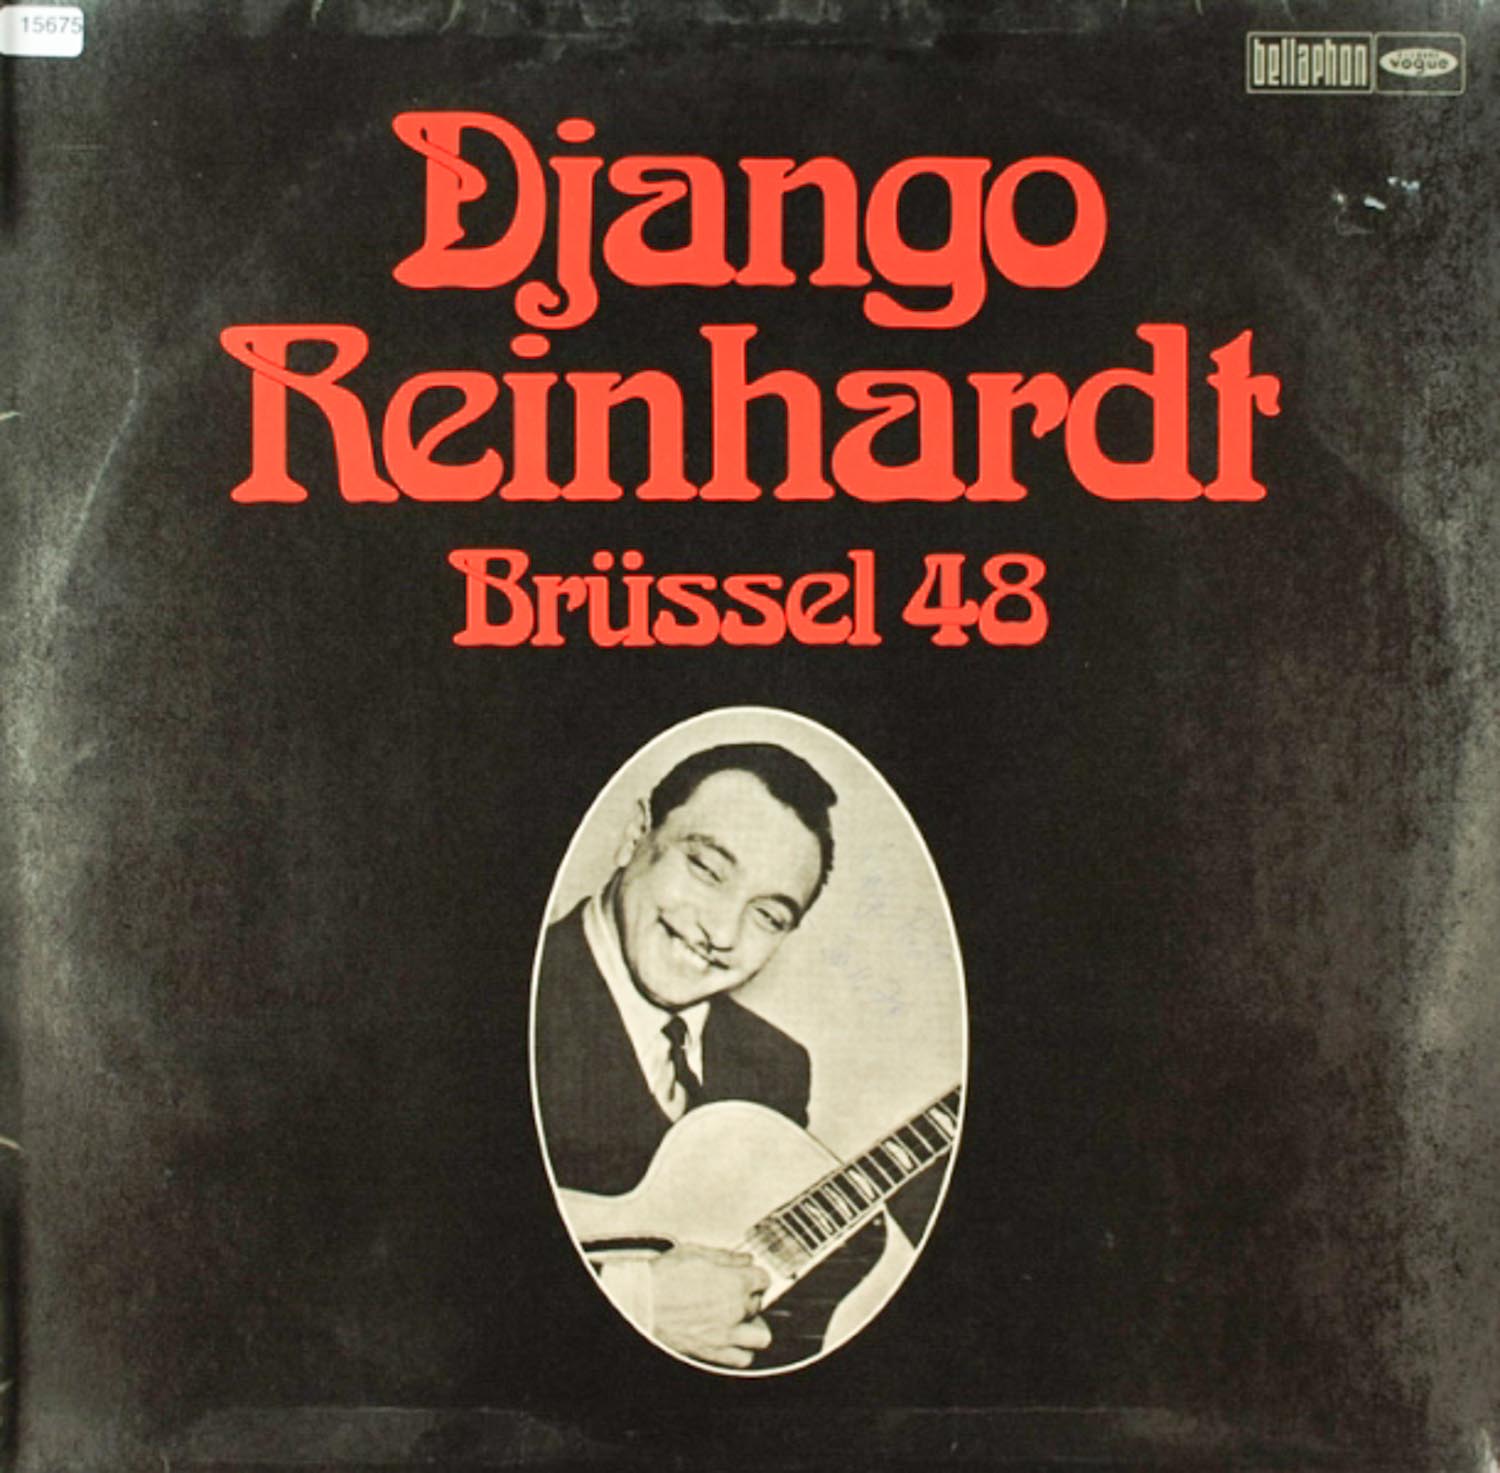 Django Reinhardt  Brüssel 48 (BI 15106)  *LP 12'' (Vinyl)*. 